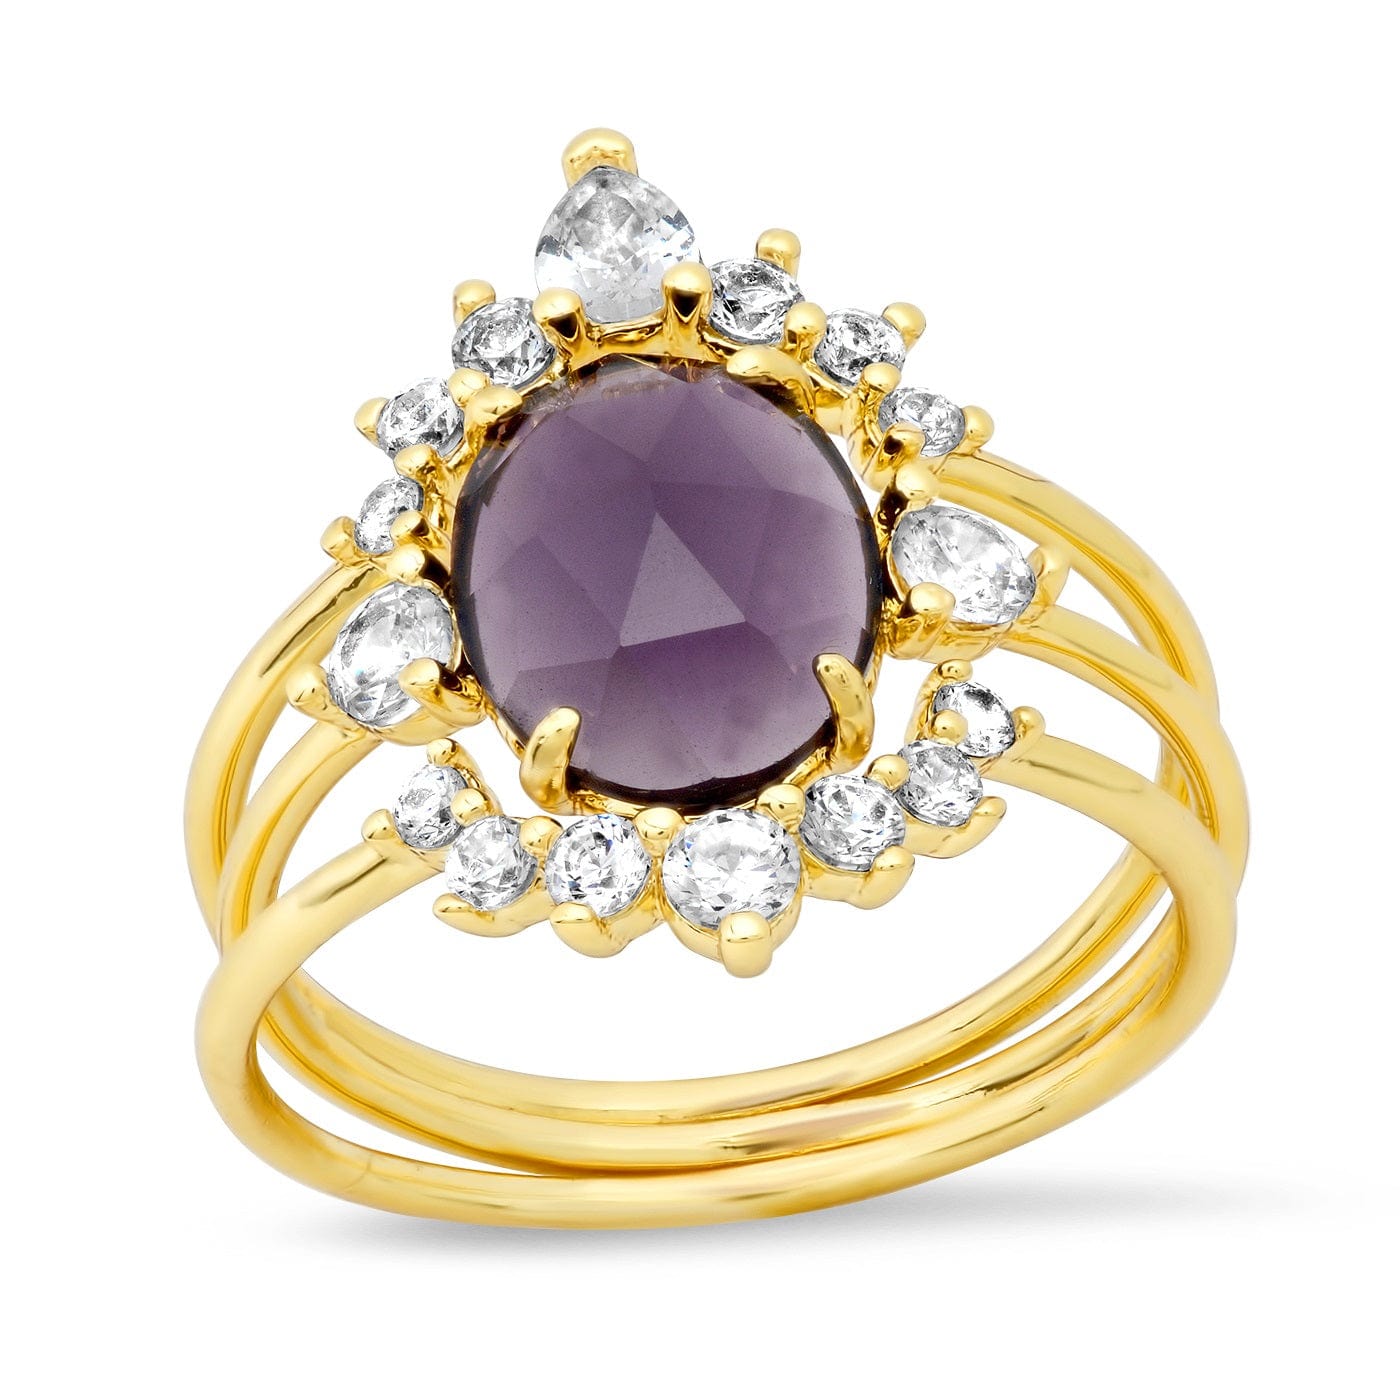 TAI JEWELRY Rings February / 6 Three Piece Vintage Inspired Birthstone Ring